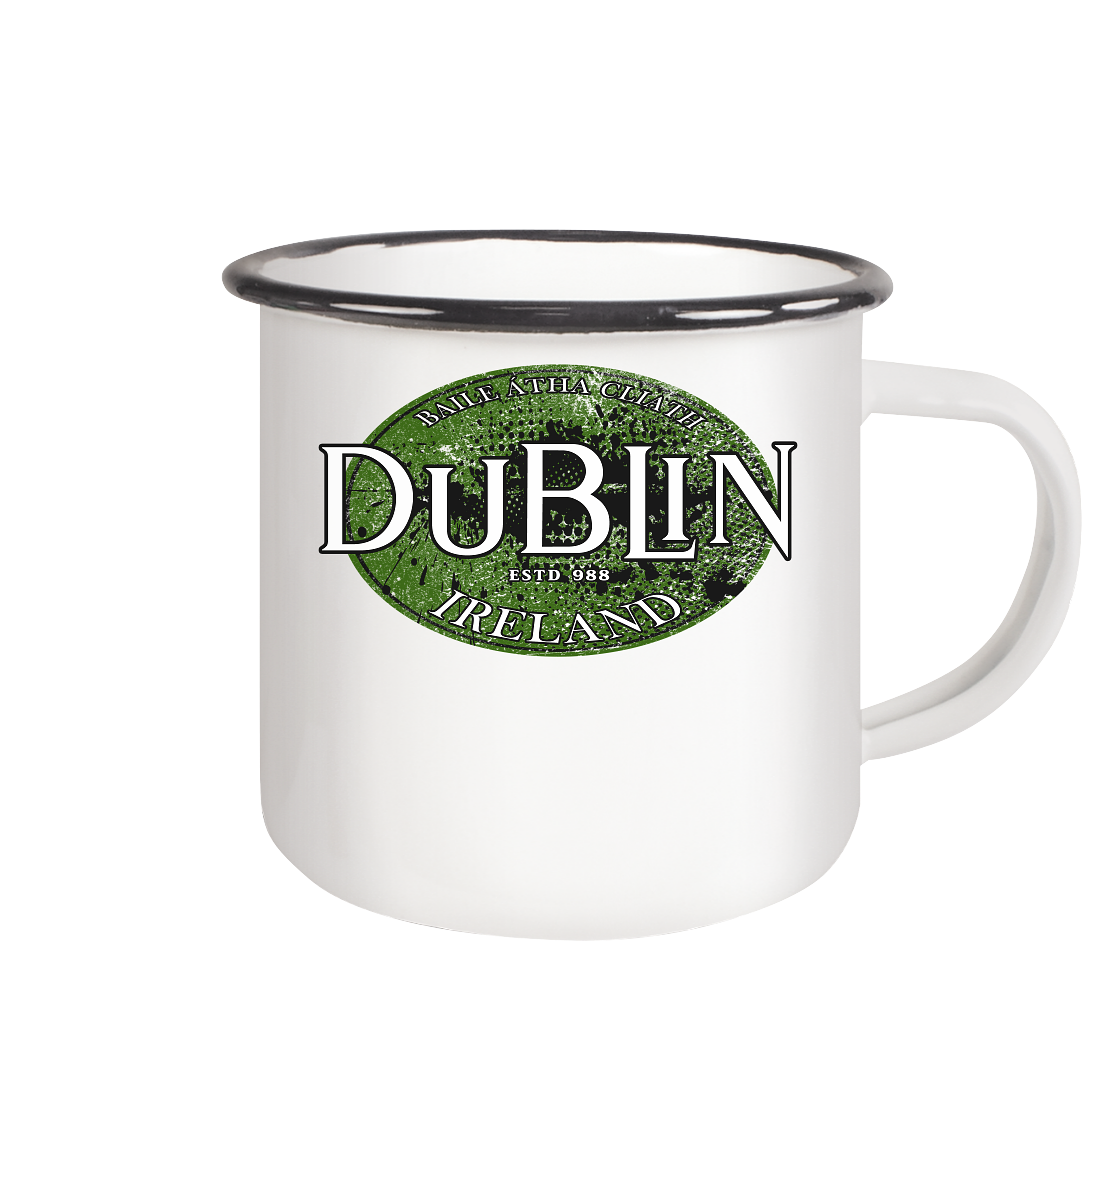 Dublin "Ireland / Baile Átha Cliath / Estd 988" - Emaille Tasse (Black)